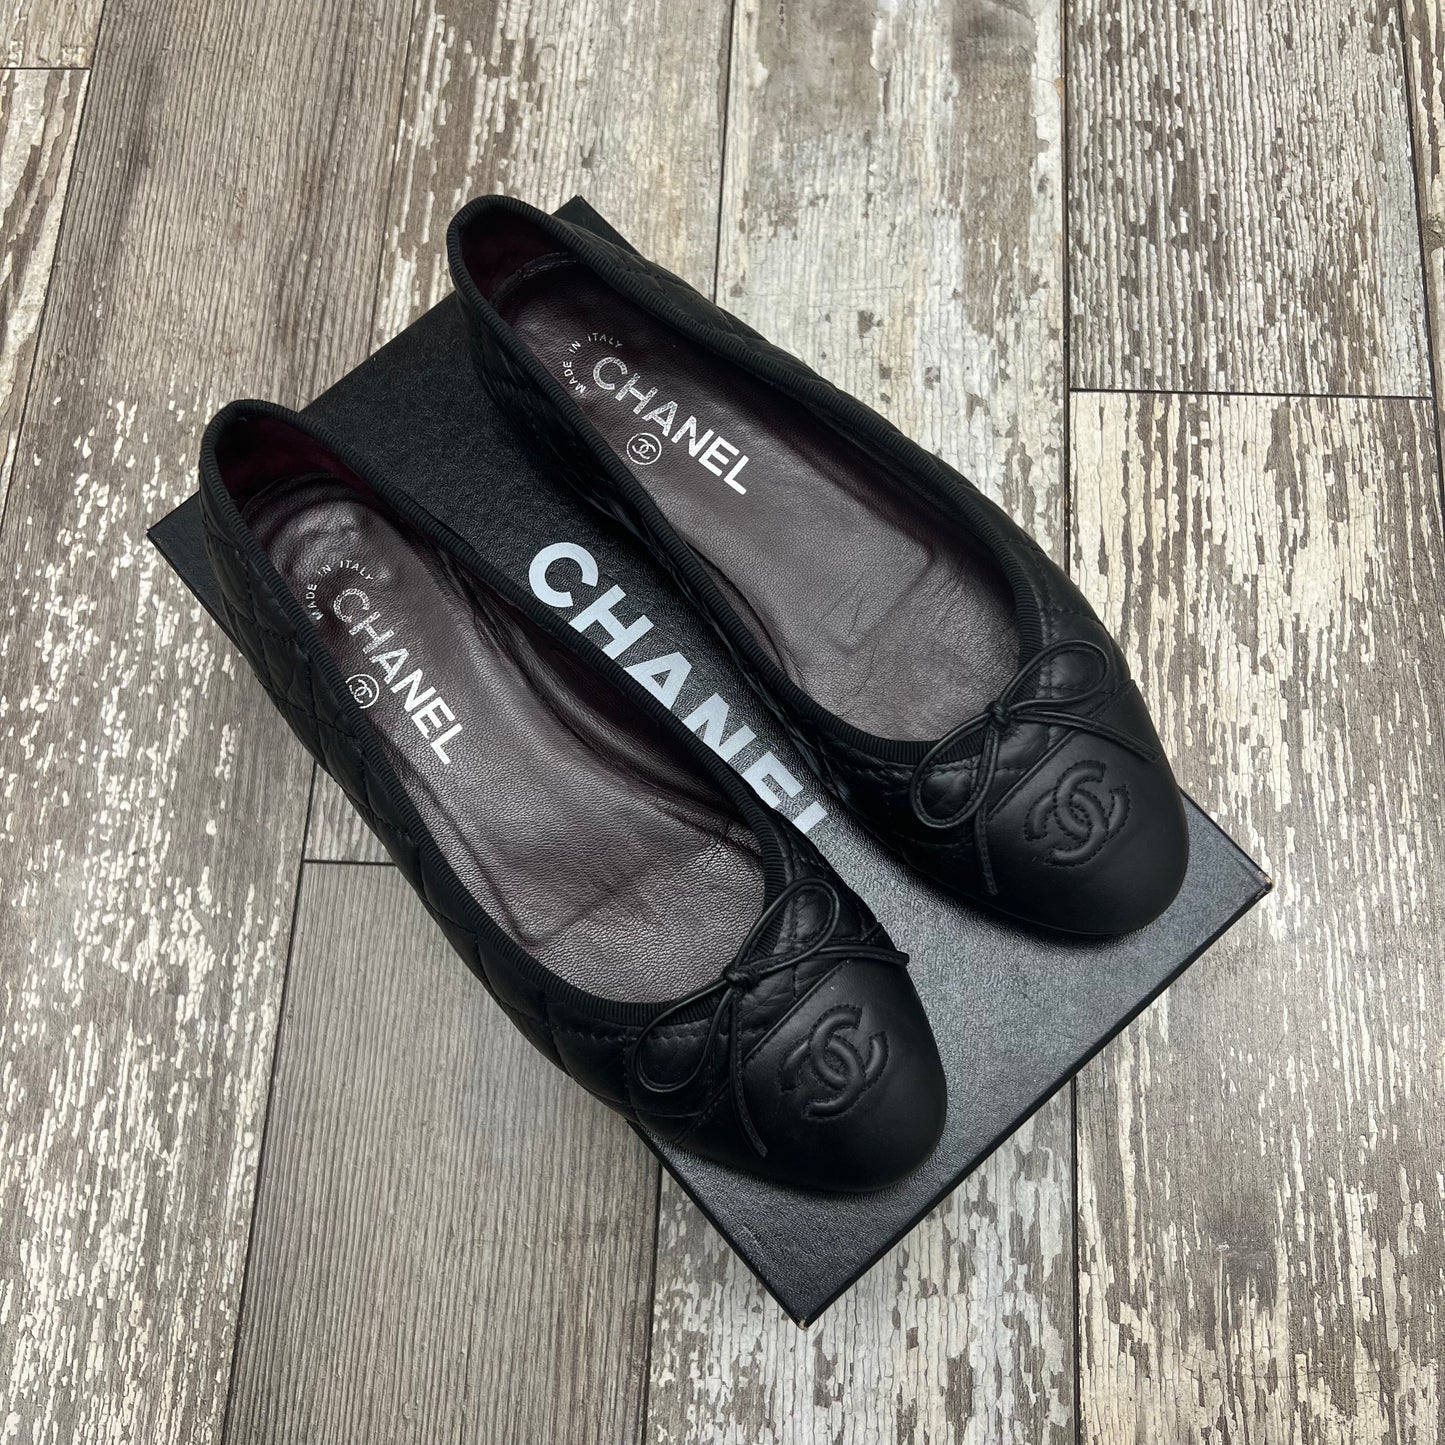 Chanel Ballerina Flats Size 38